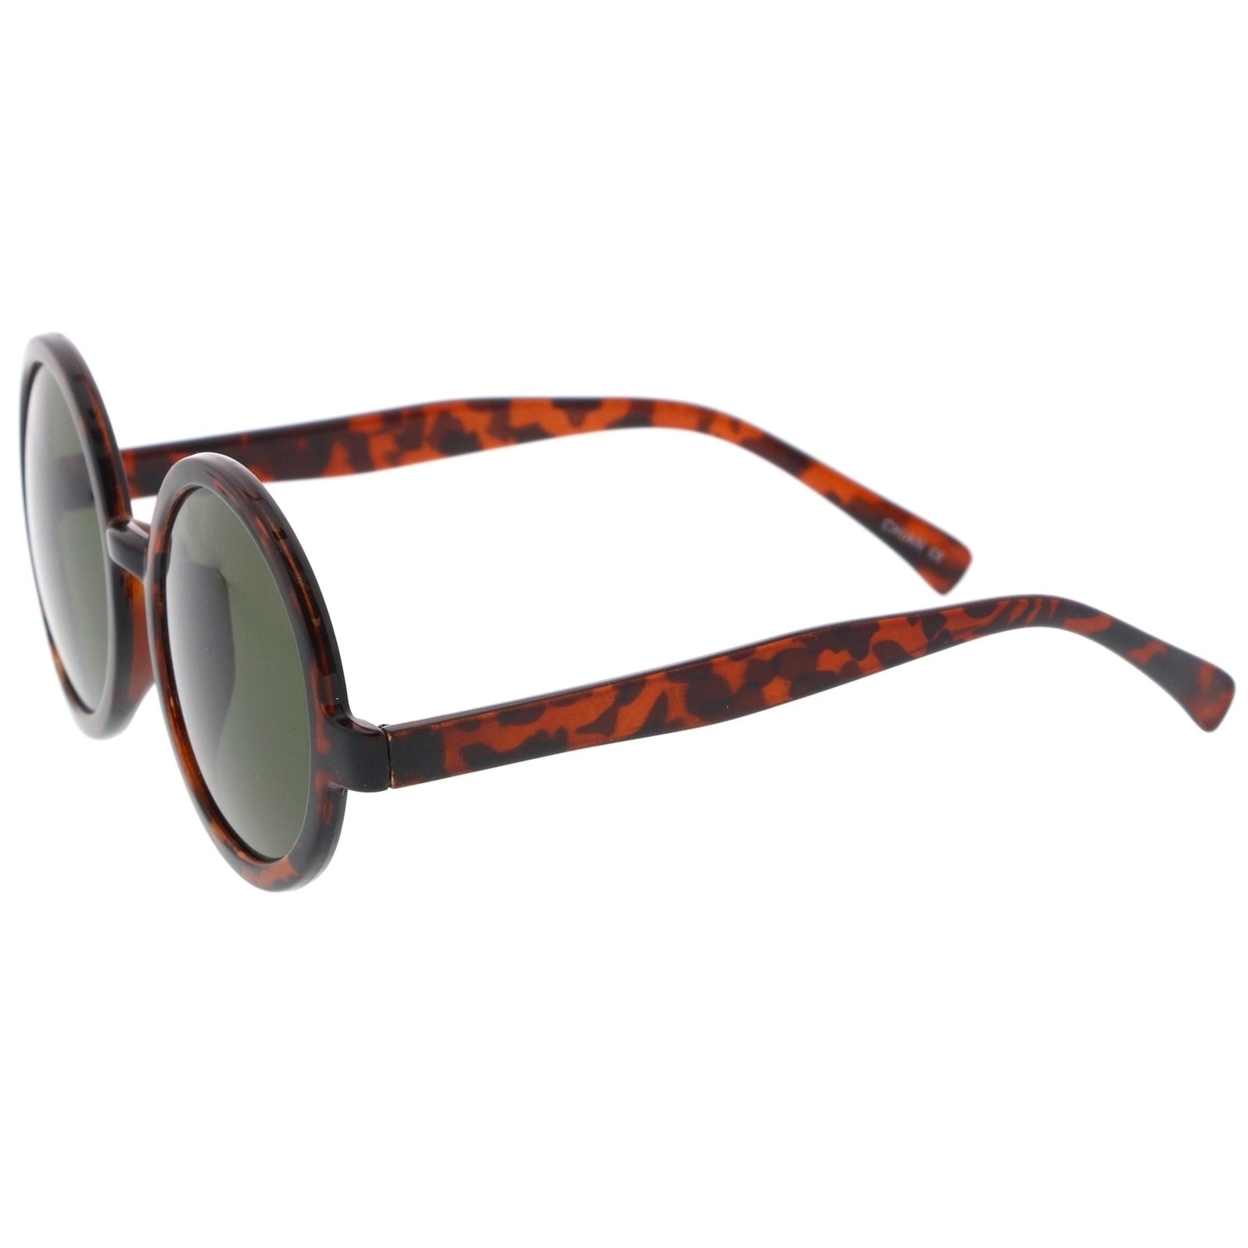 Classic Retro Horn Rimmed Neutral-Colored Lens Round Sunglasses 52mm - Matte Black / Lavender